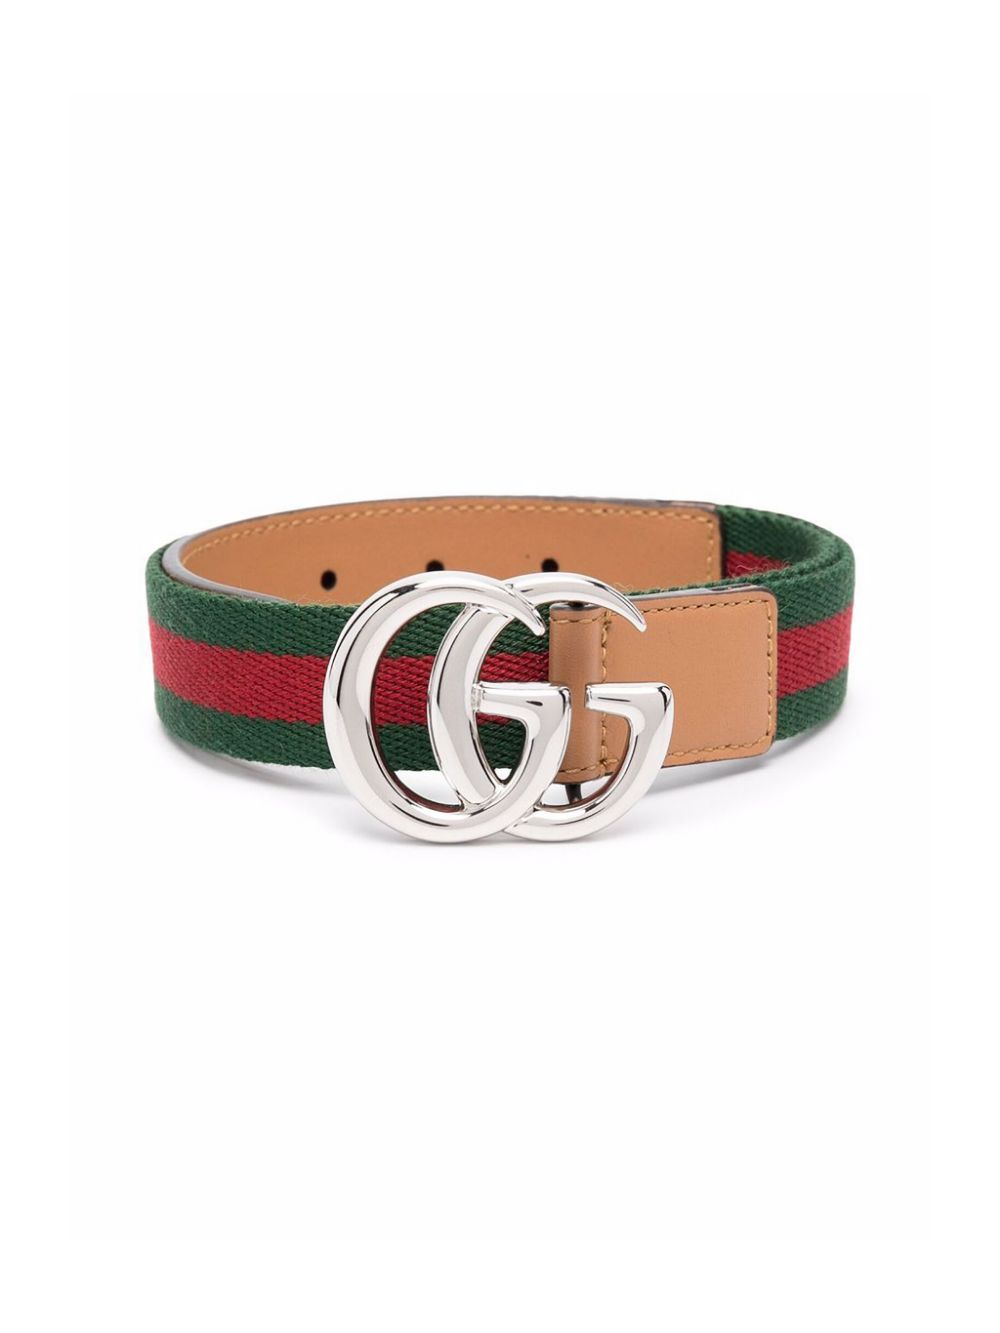 Cintura verde e rosso per bambini con logo